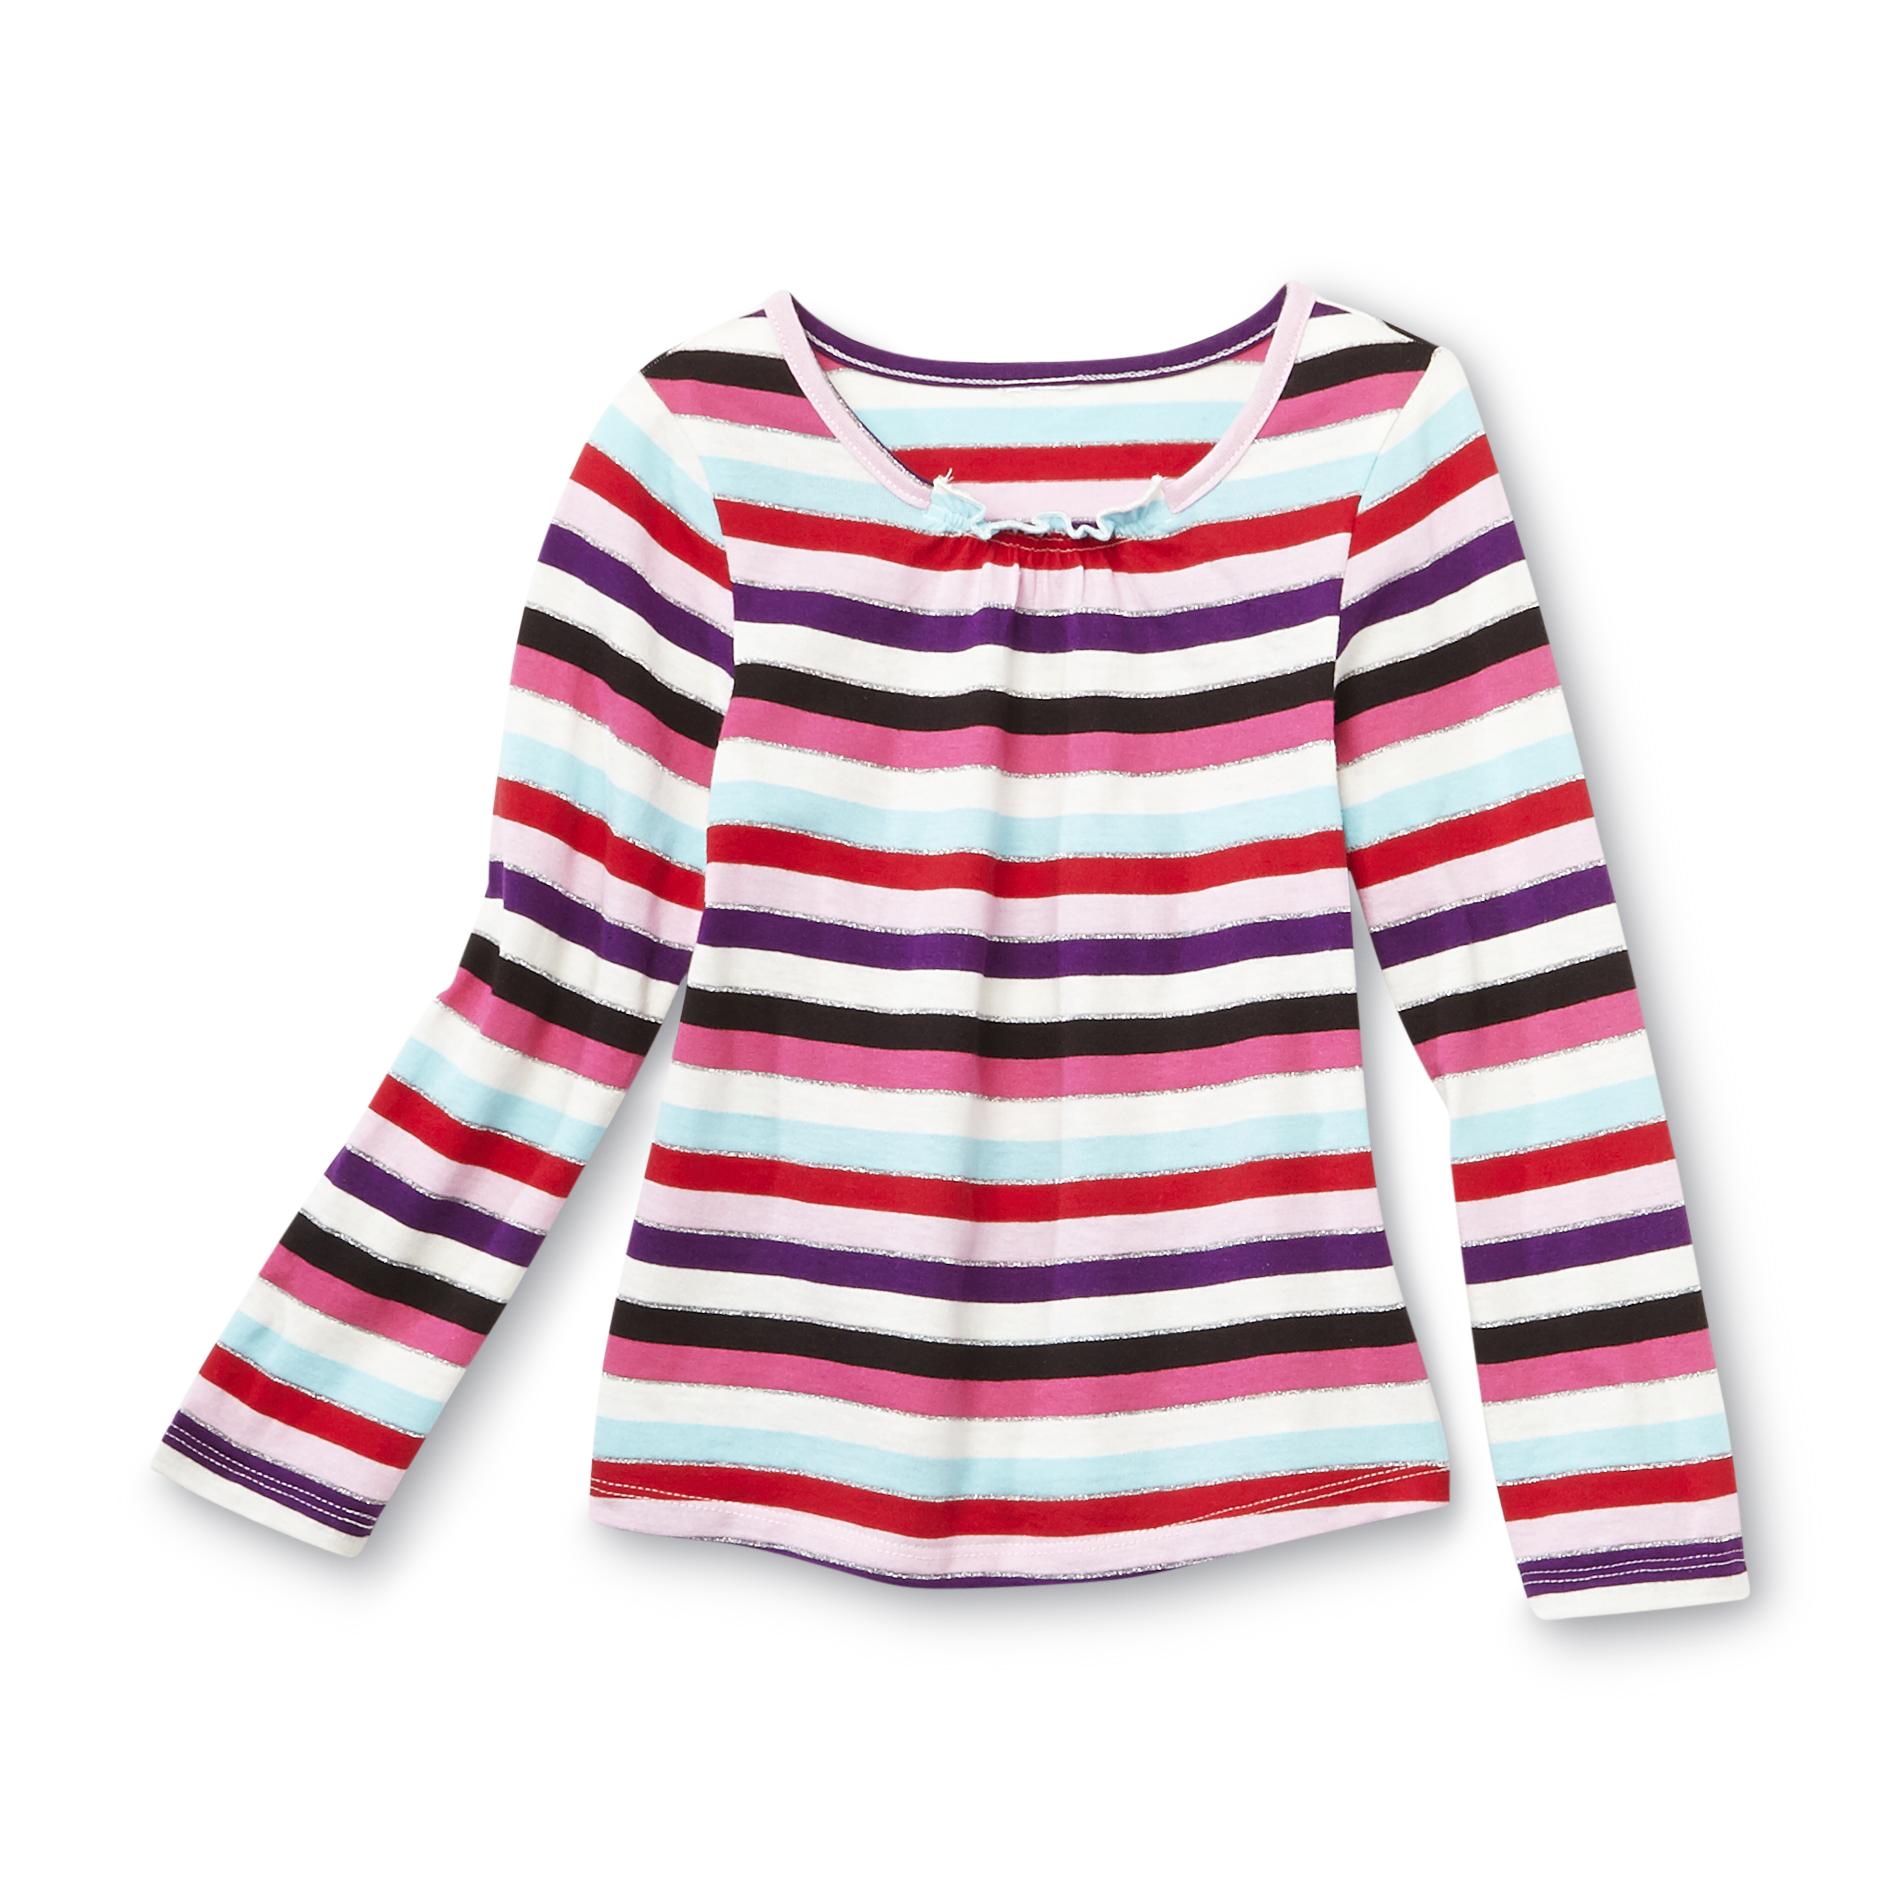 WonderKids Infant & Toddler Girl's Long-Sleeve Tunic Top - Striped